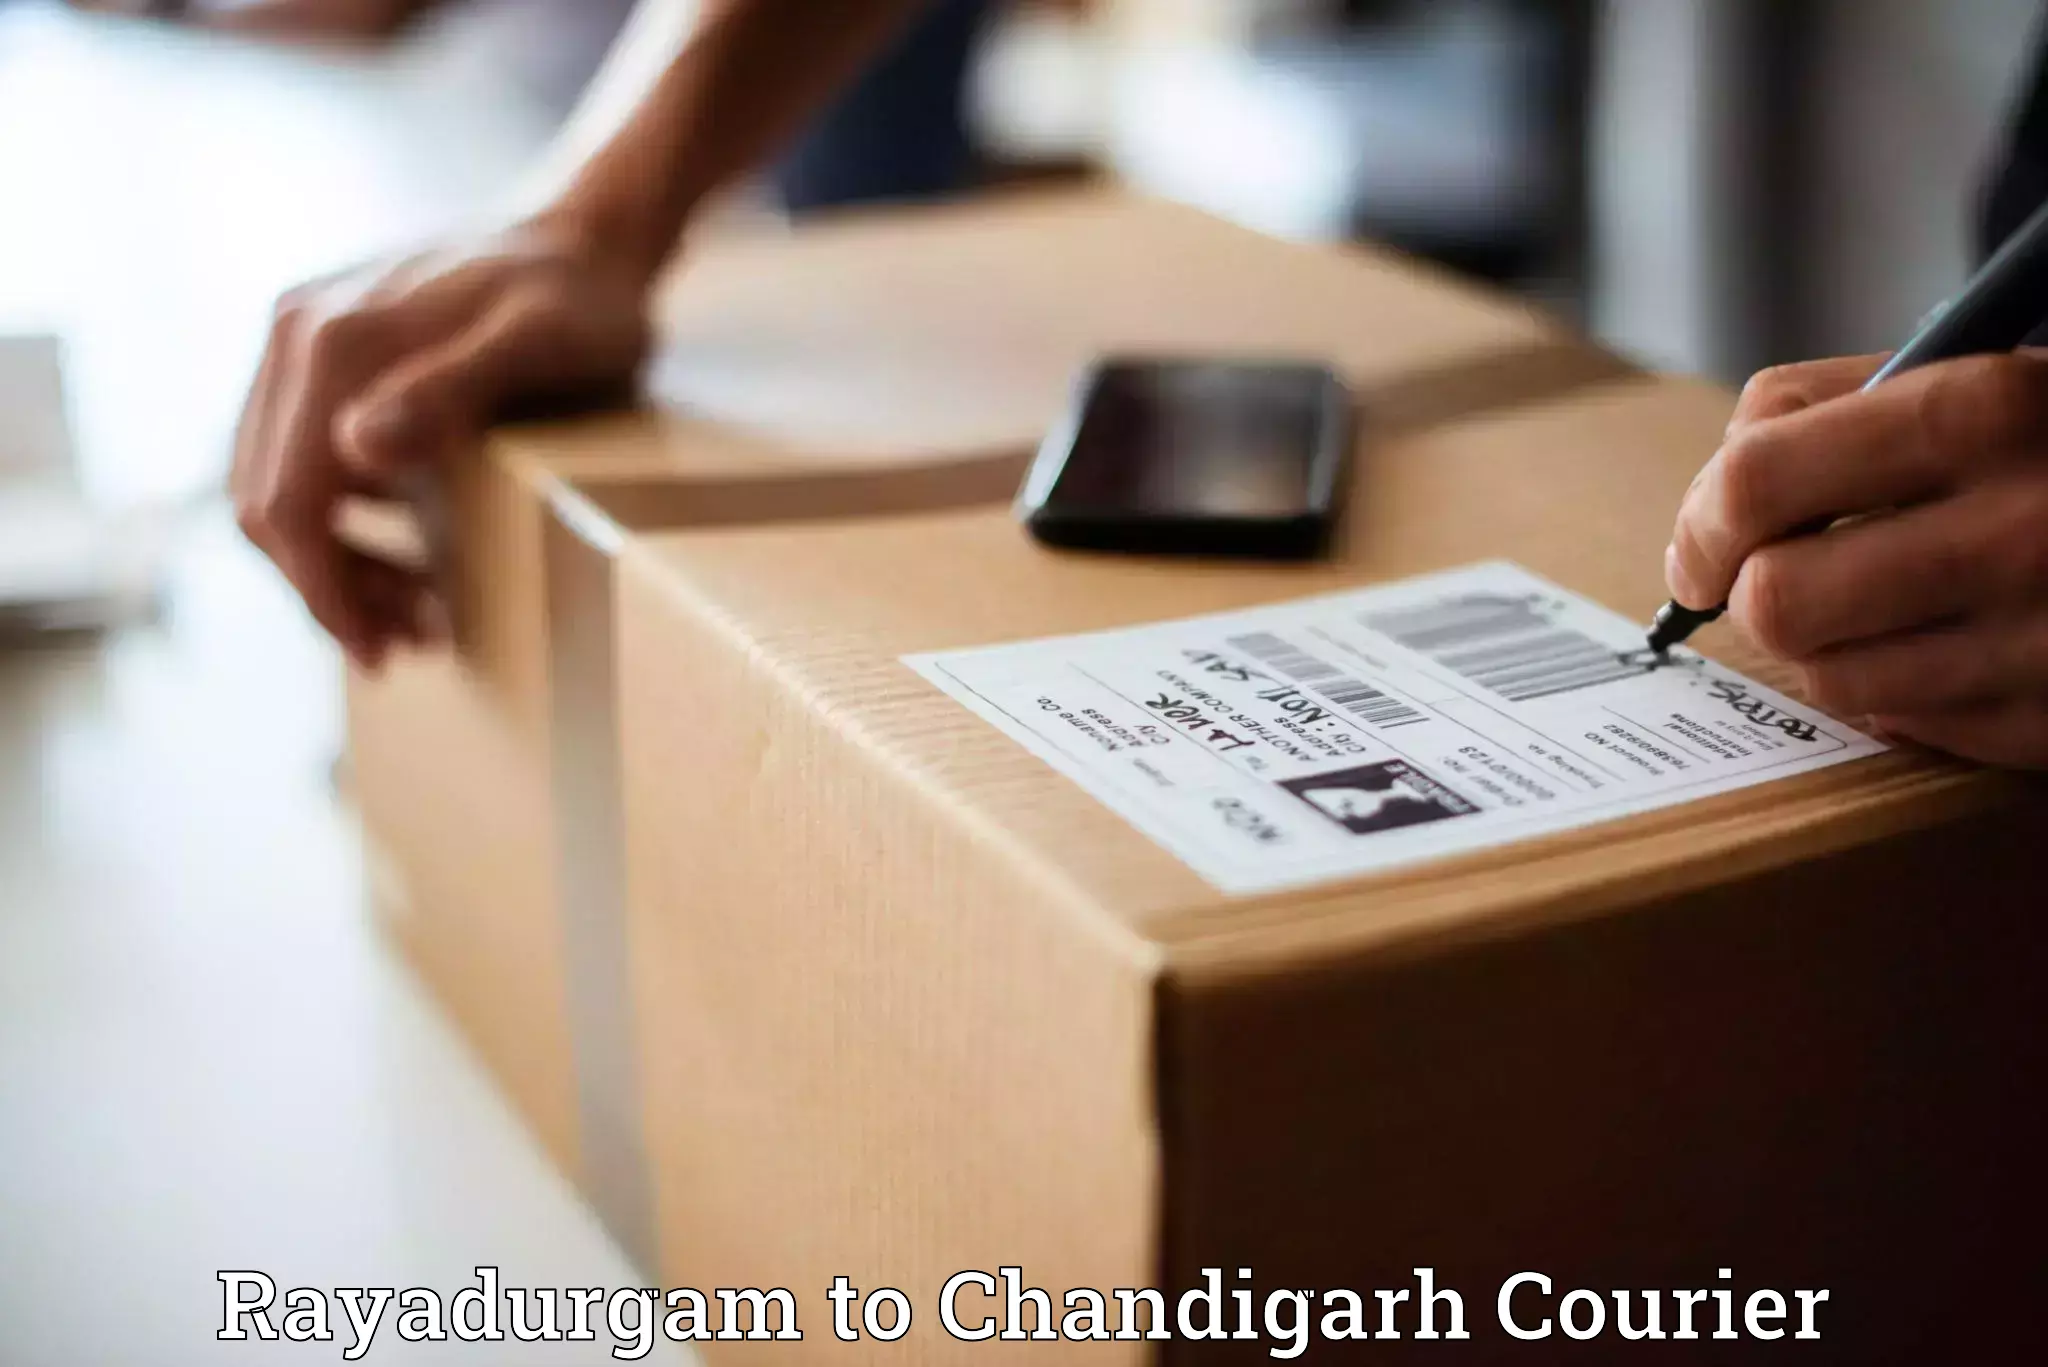 Courier service innovation Rayadurgam to Chandigarh